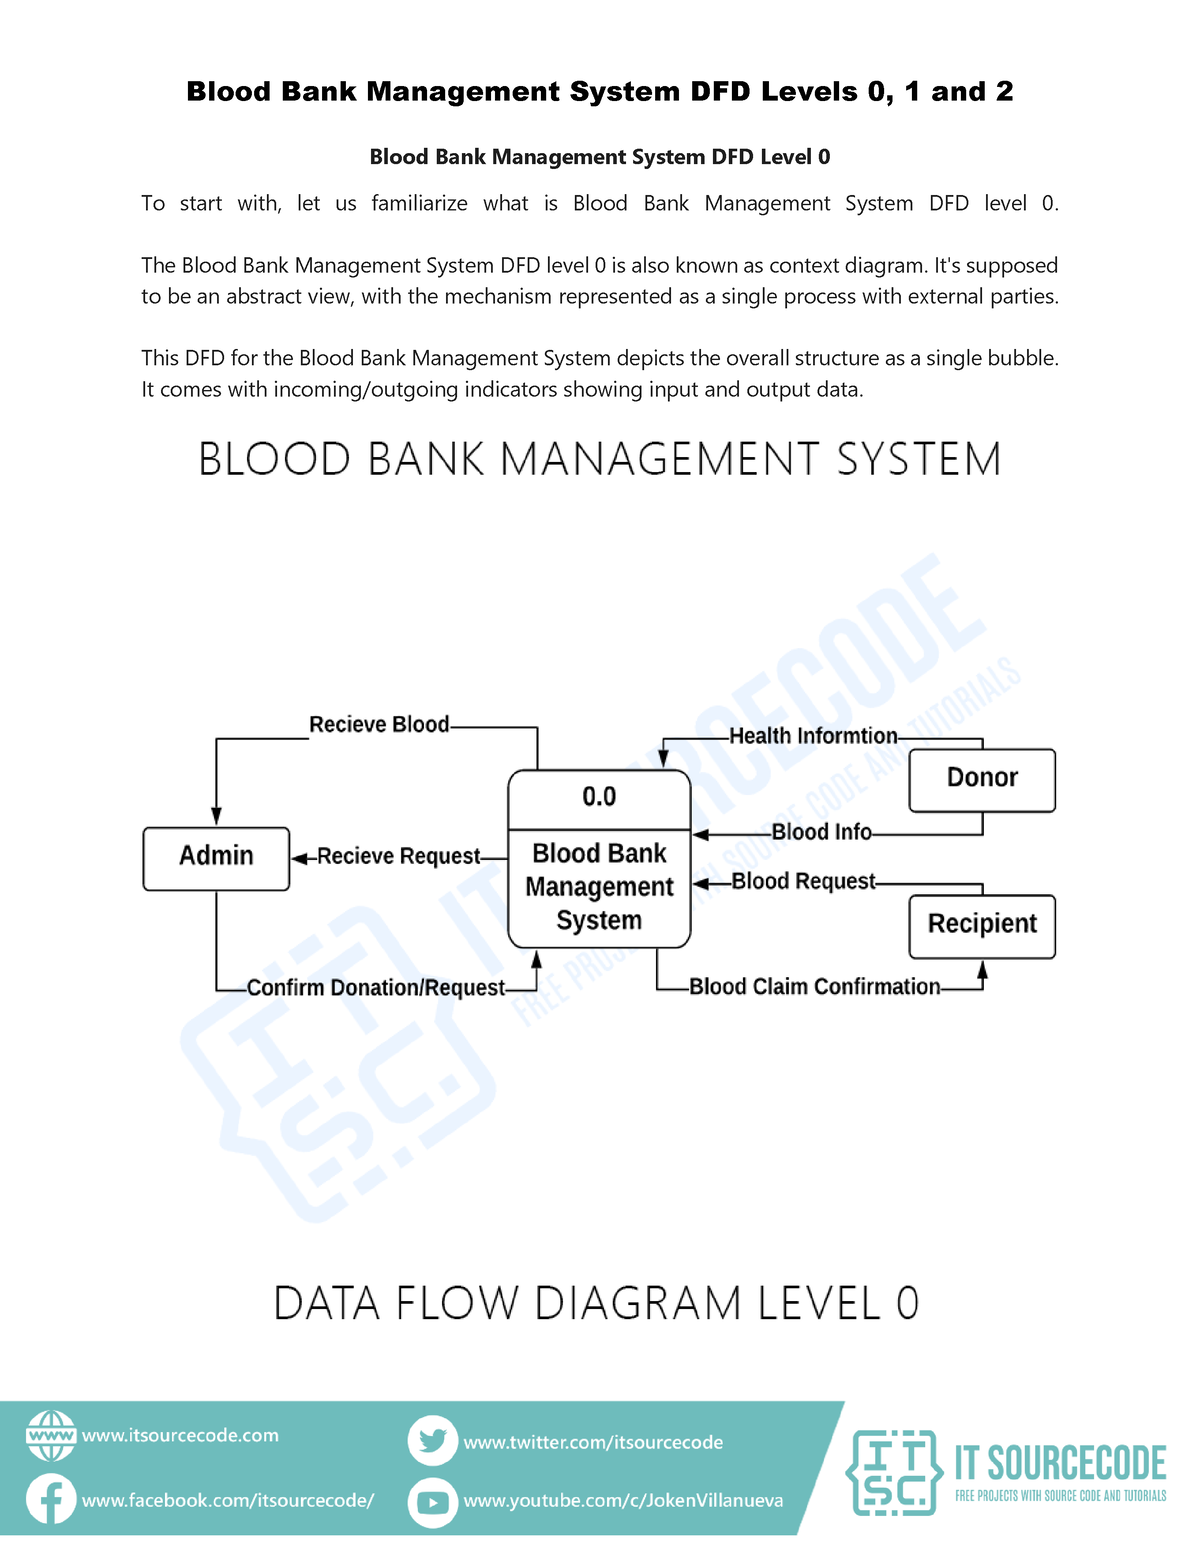 blood-bank-management-system-dfd-levels-0-1-2-the-blood-bank